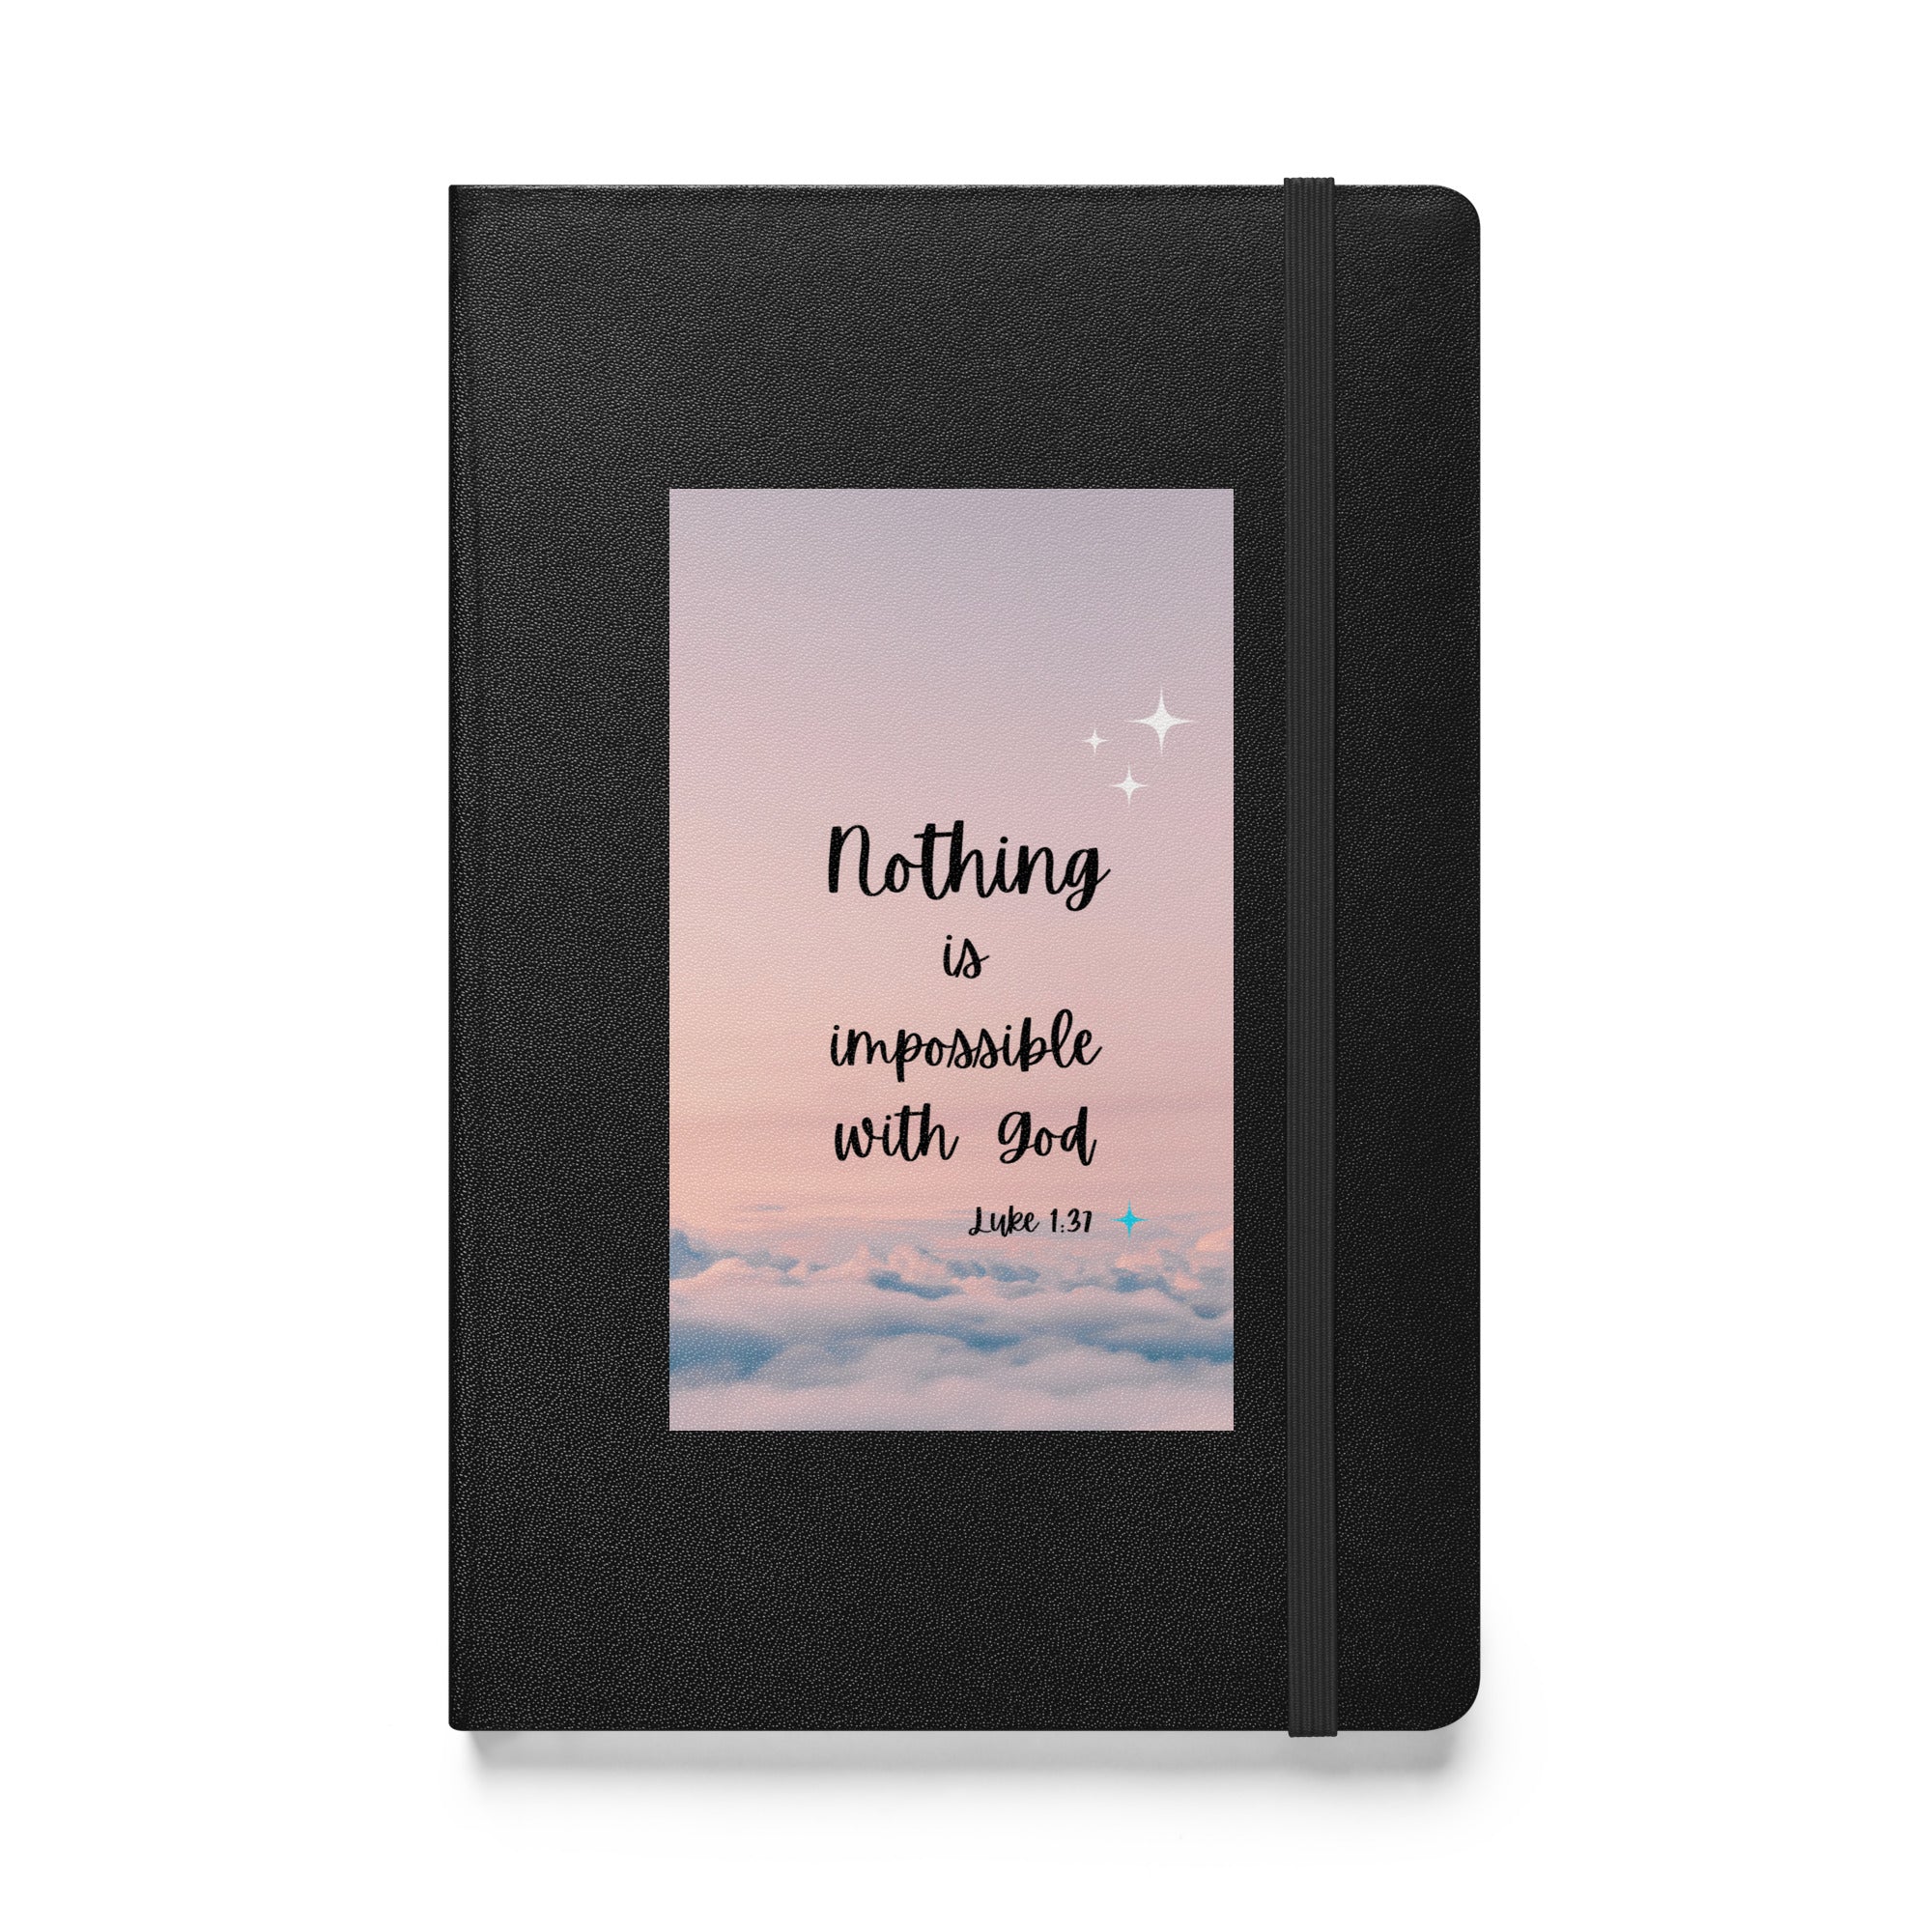 Hardcover bound notebook - Luke 1:37